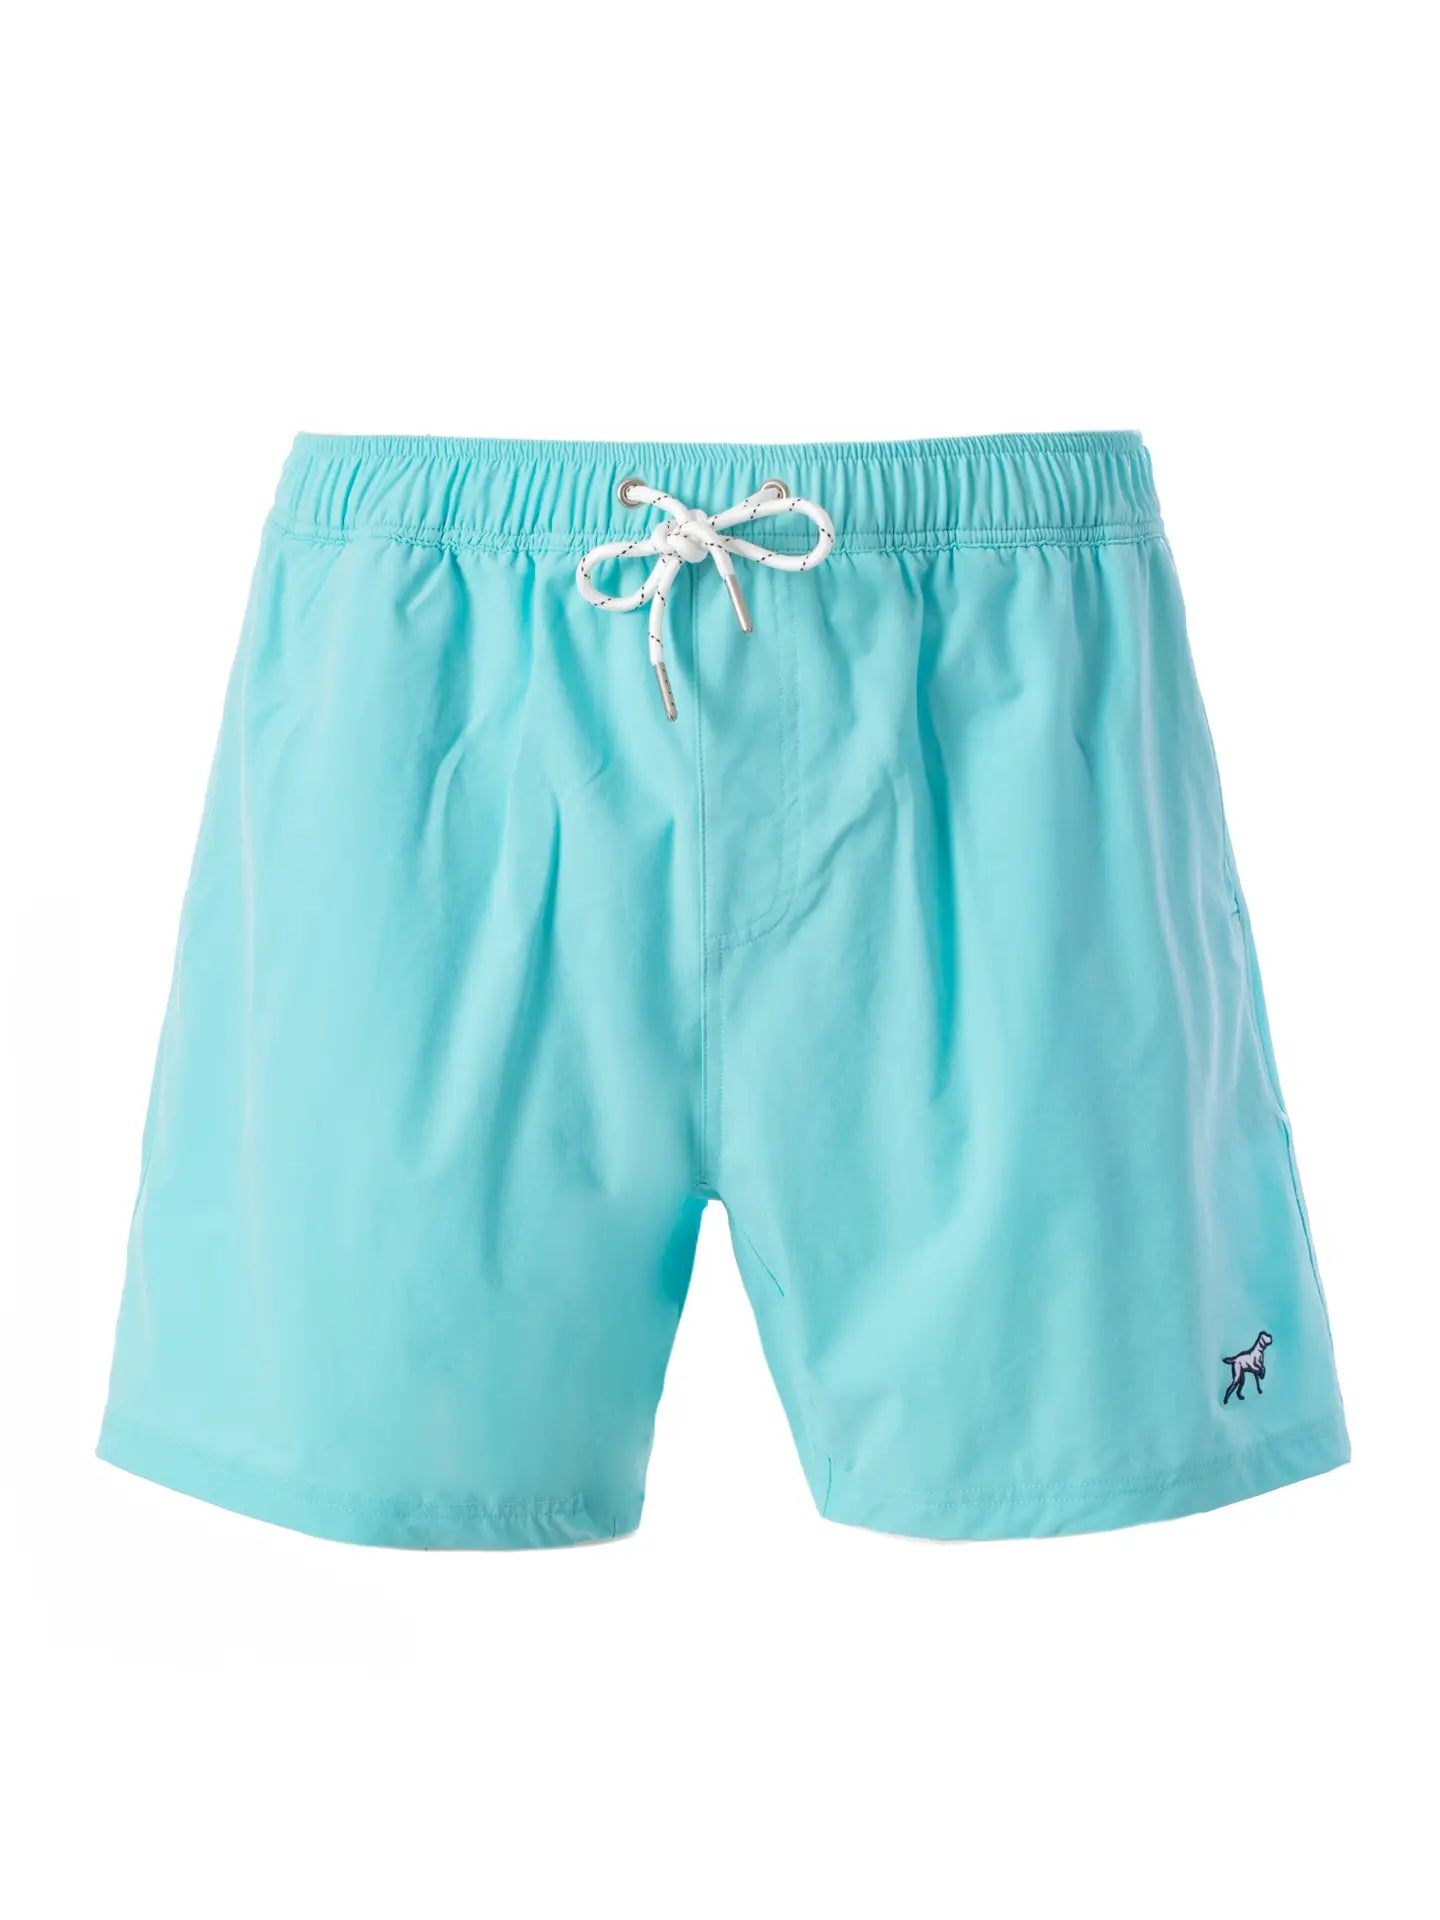 Hydro Shorts-MINT